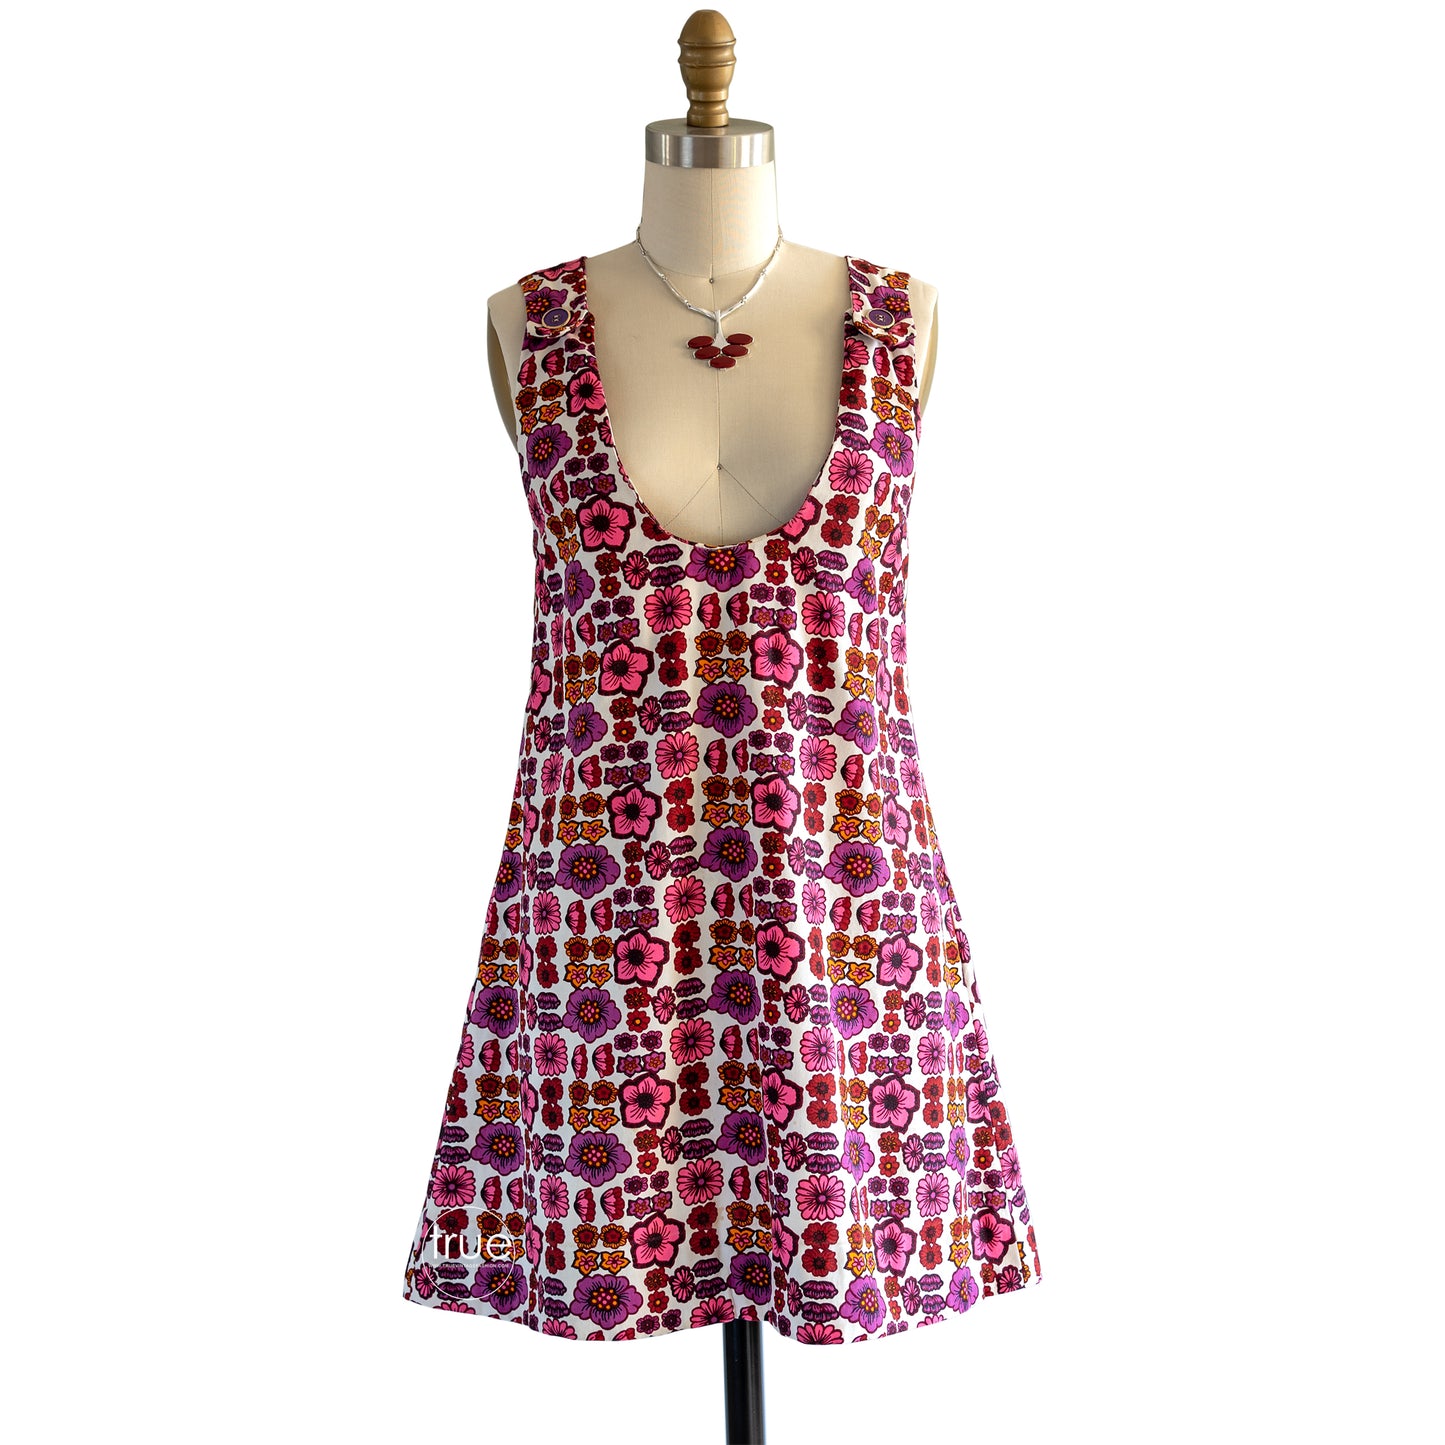 vintage 1960's mini pinafore dress ...super fun bold graphic floral versatile cotton pinafore